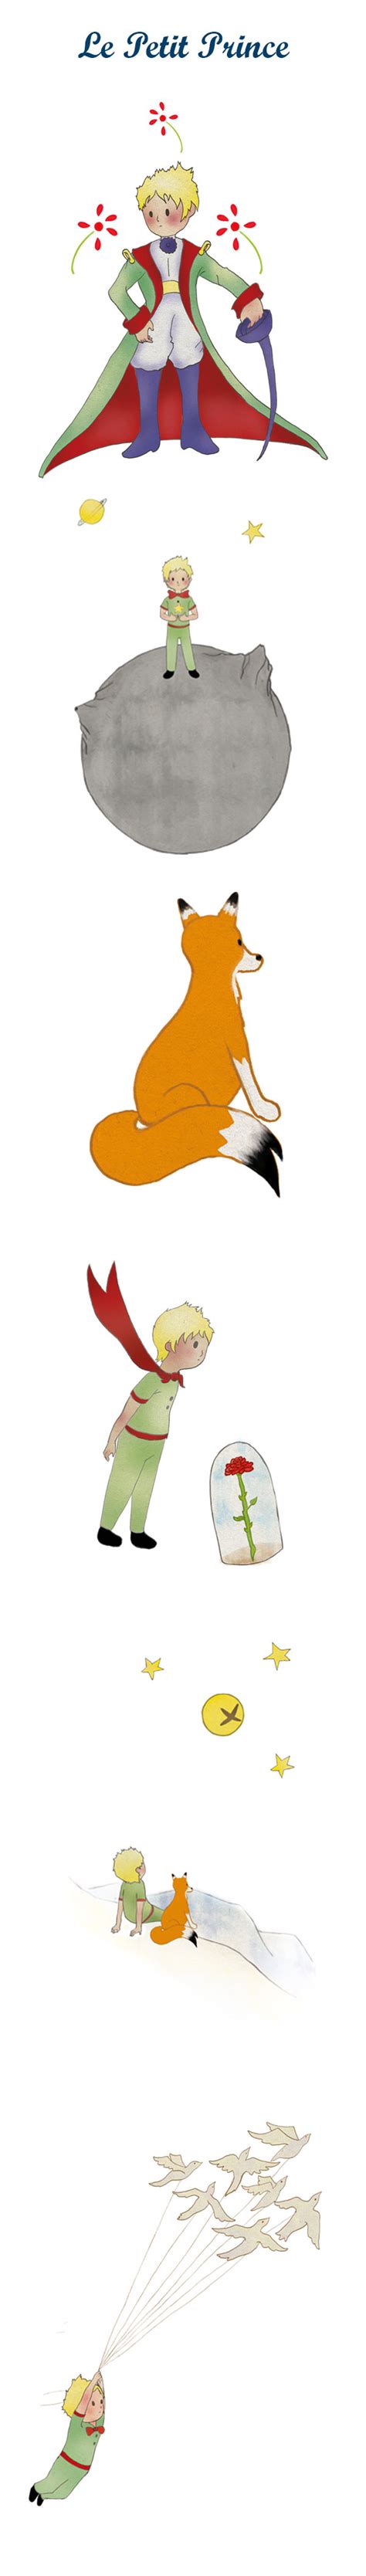 Le Petit Prince Illustrations By Pixel Malo On Deviantart